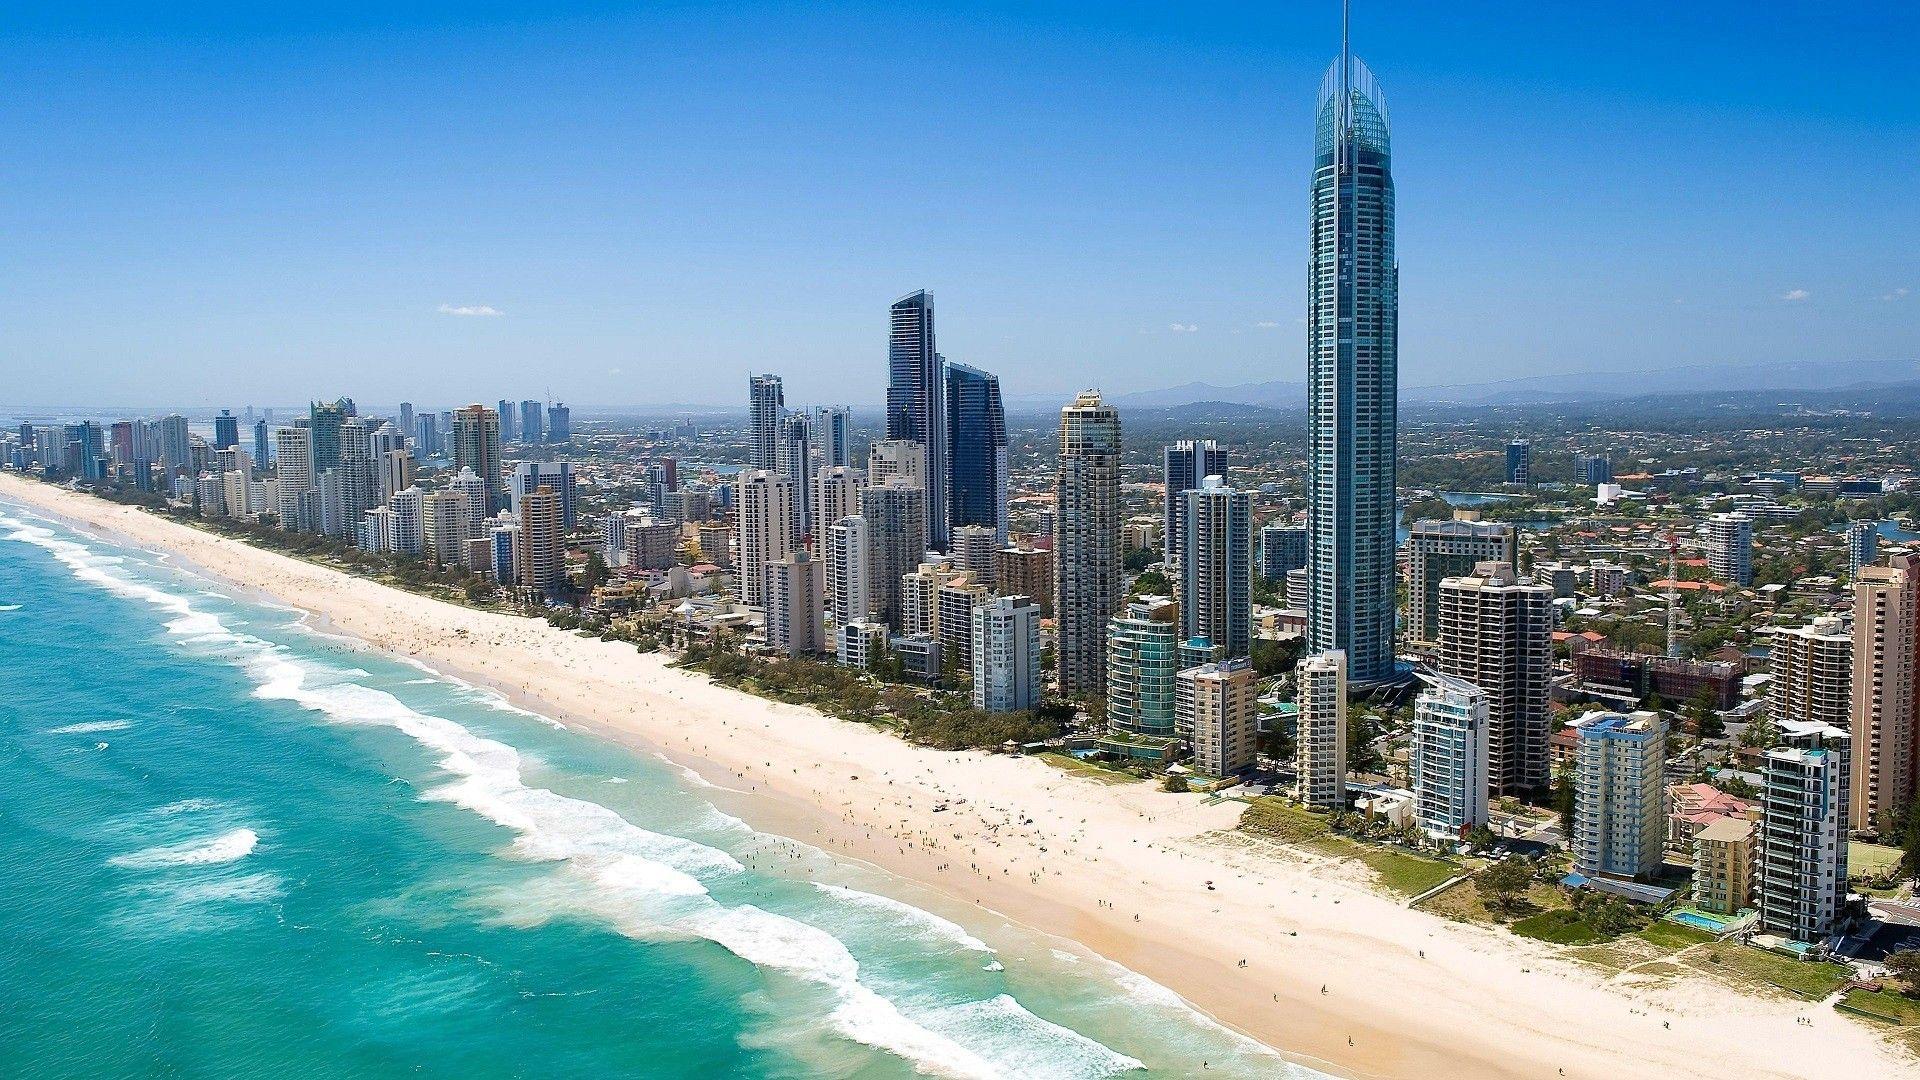 Gold coast surfers paradise queensland australia beach city